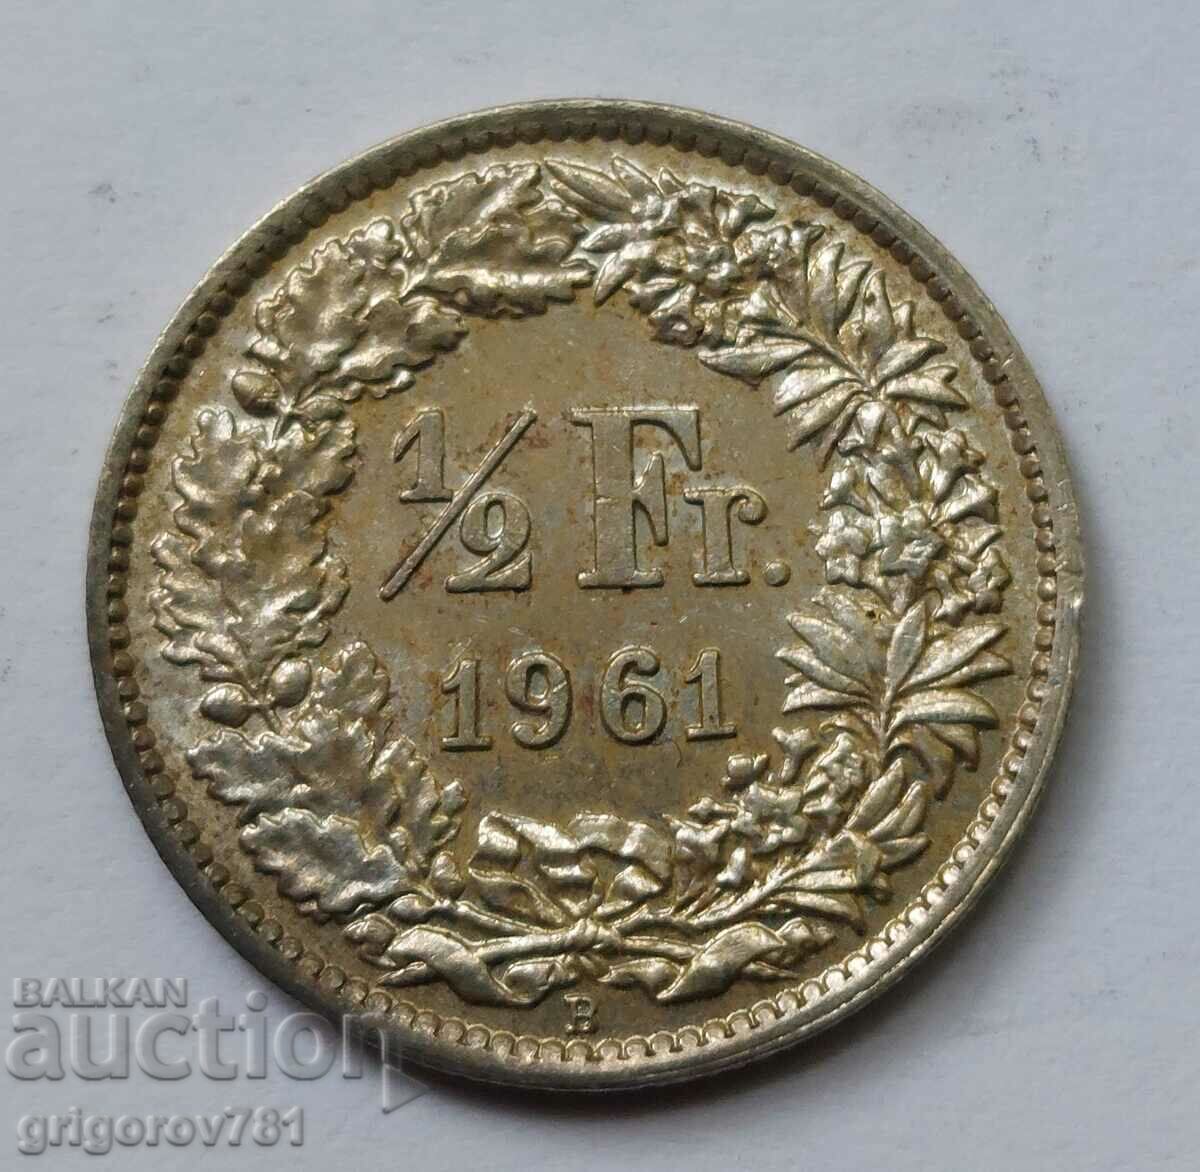 1/2 Franc Silver Switzerland 1961 B - Silver Coin #6